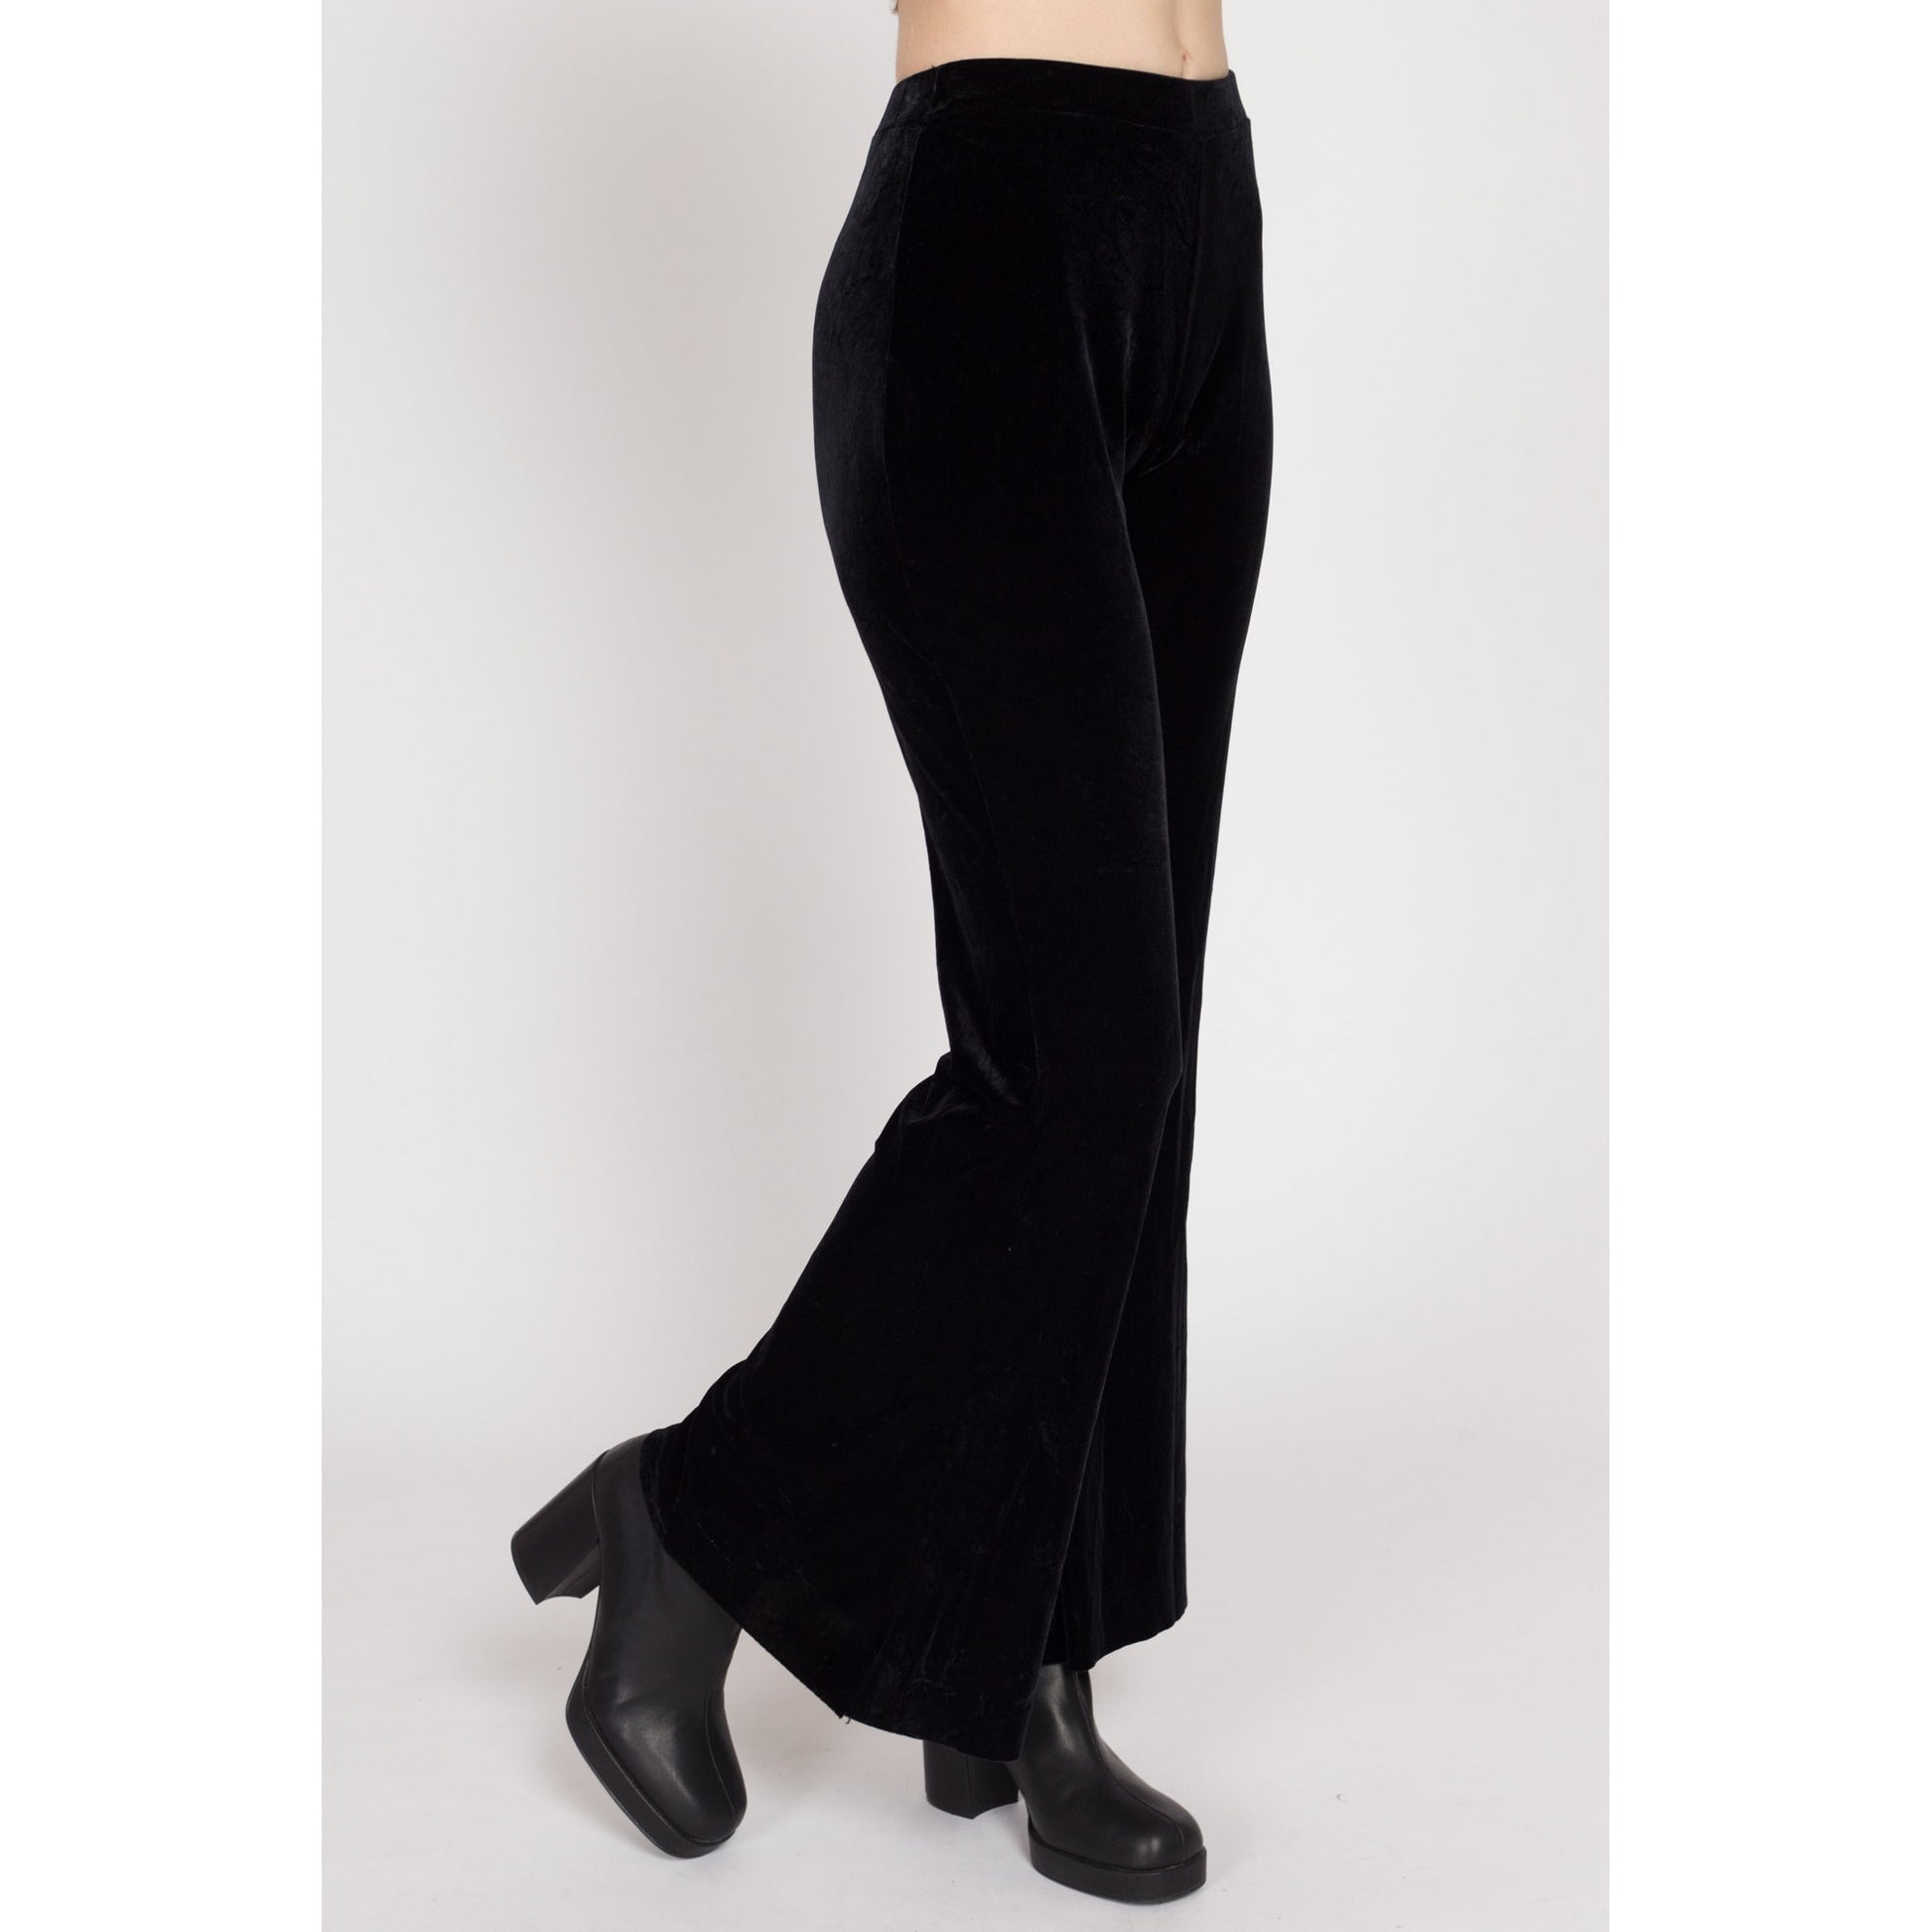 XS-Sm 90s Black Velvet Flared Pants | Vintage High Waisted Stretchy Bell Bottom Flares